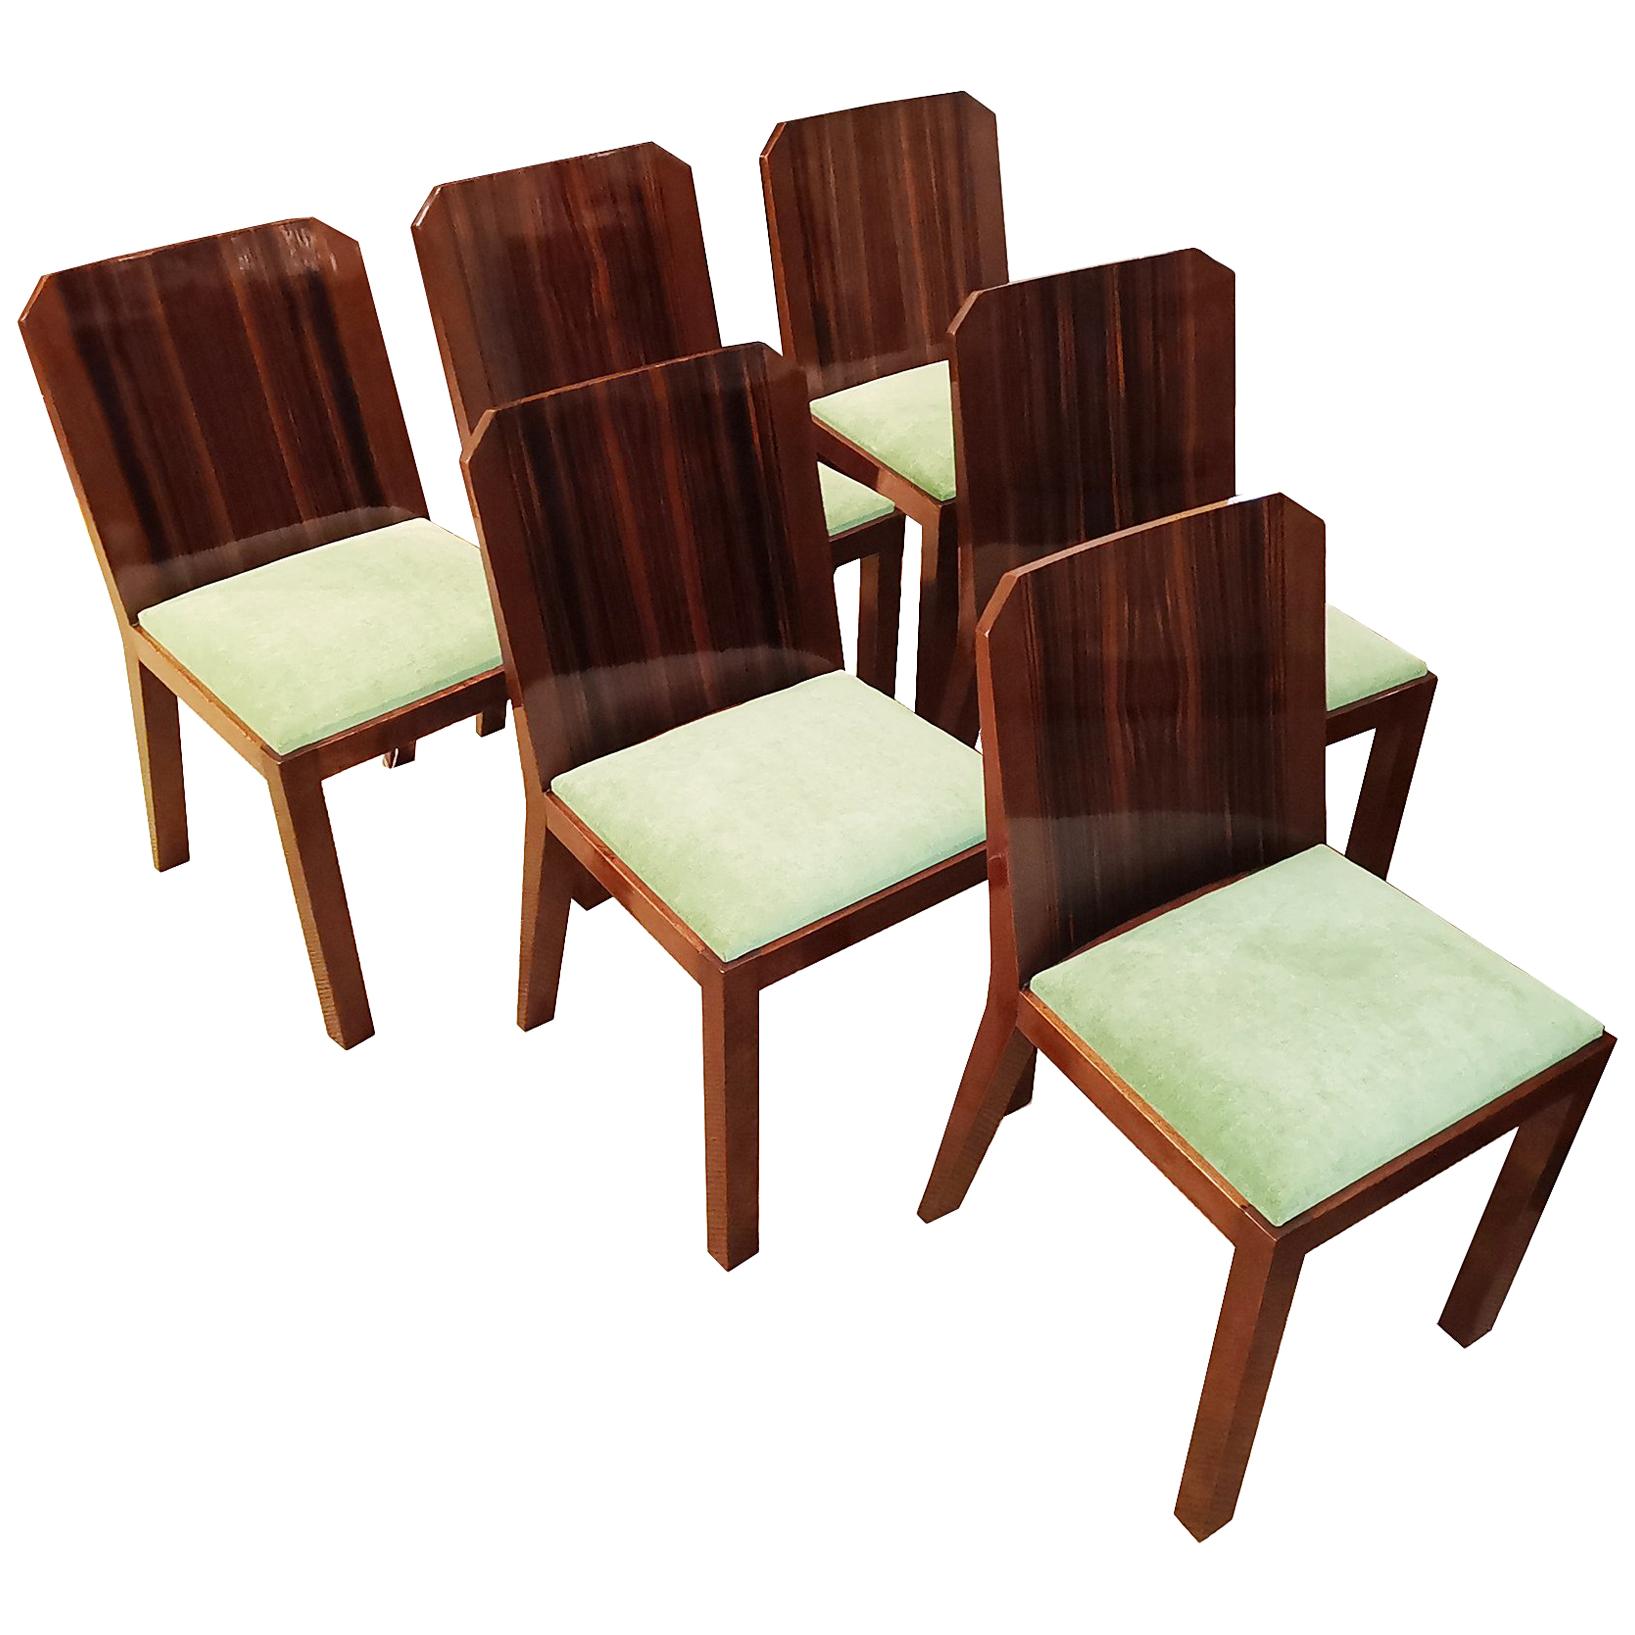 Set of Six Art Deco Chairs in Walnut, Macassar Veneer and Velvet - France, 1930s For Sale